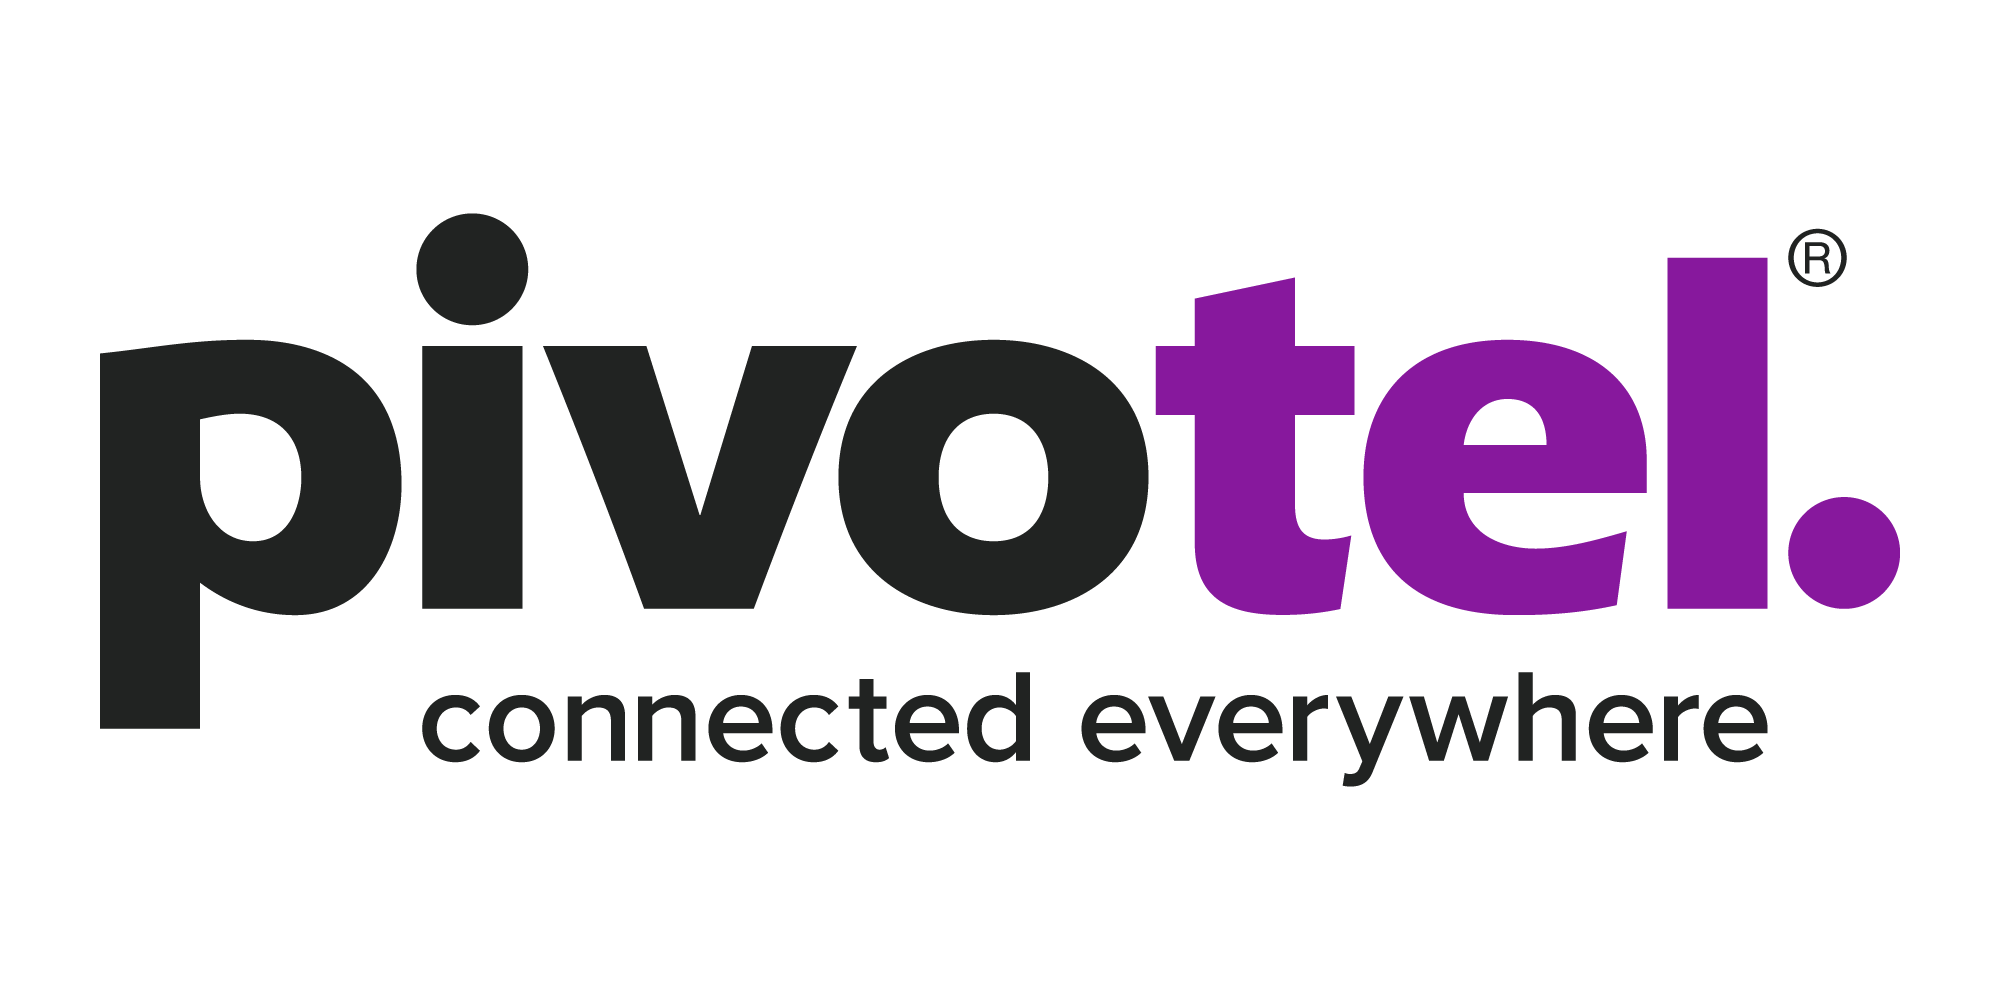 Pivotel Connected Everywhere satphone satellite phone logo